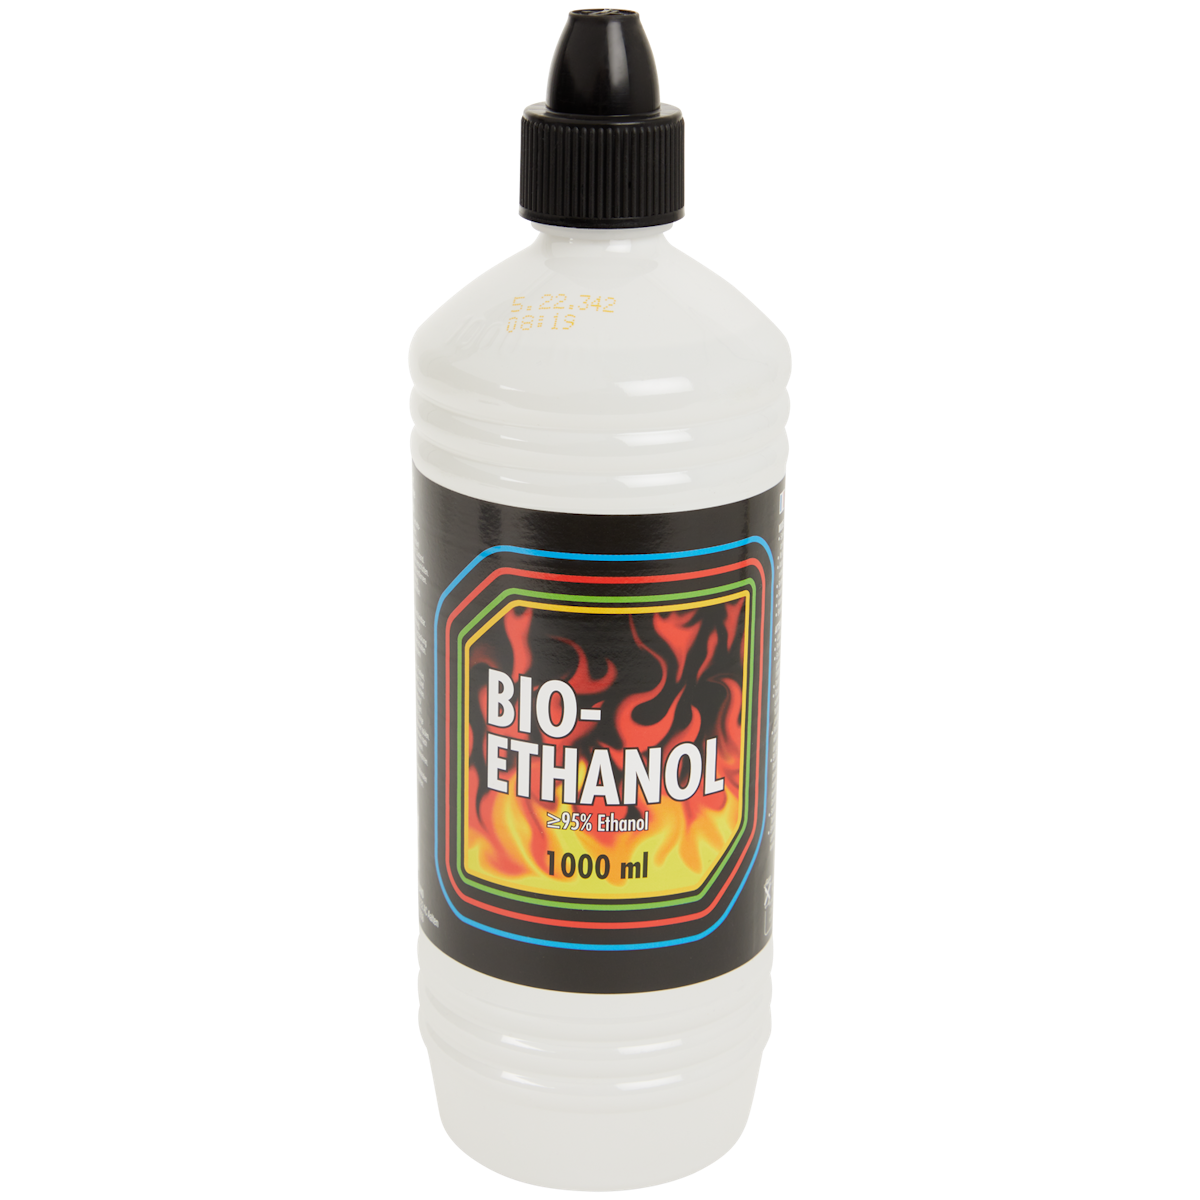 Bio-ethanol